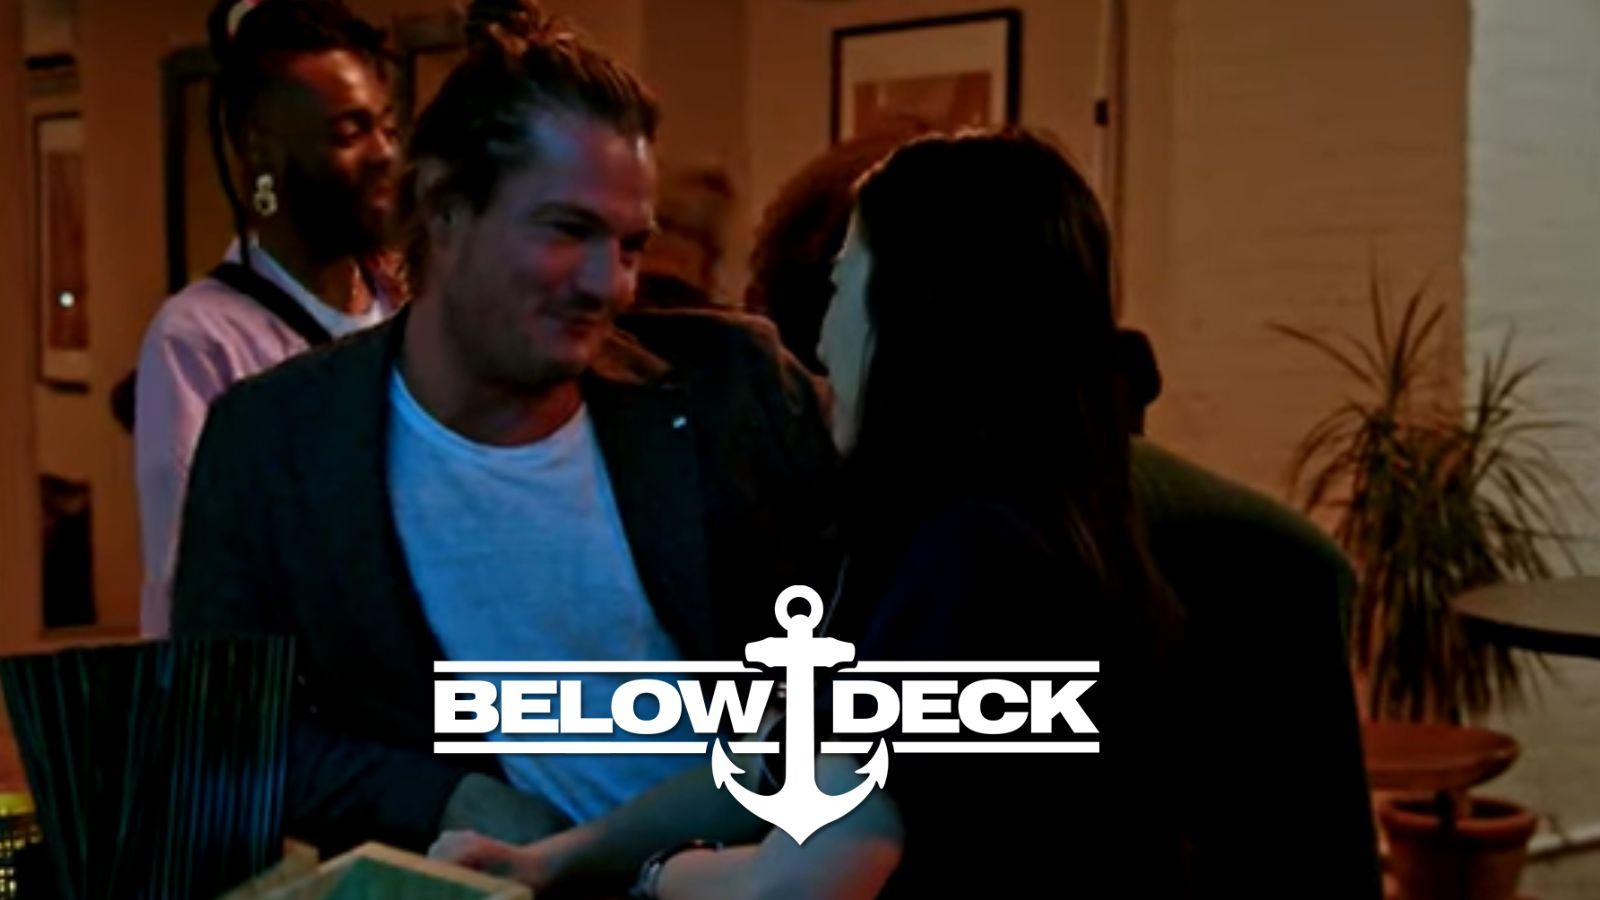 Gary from Below Deck Sailing Yacht Season 4